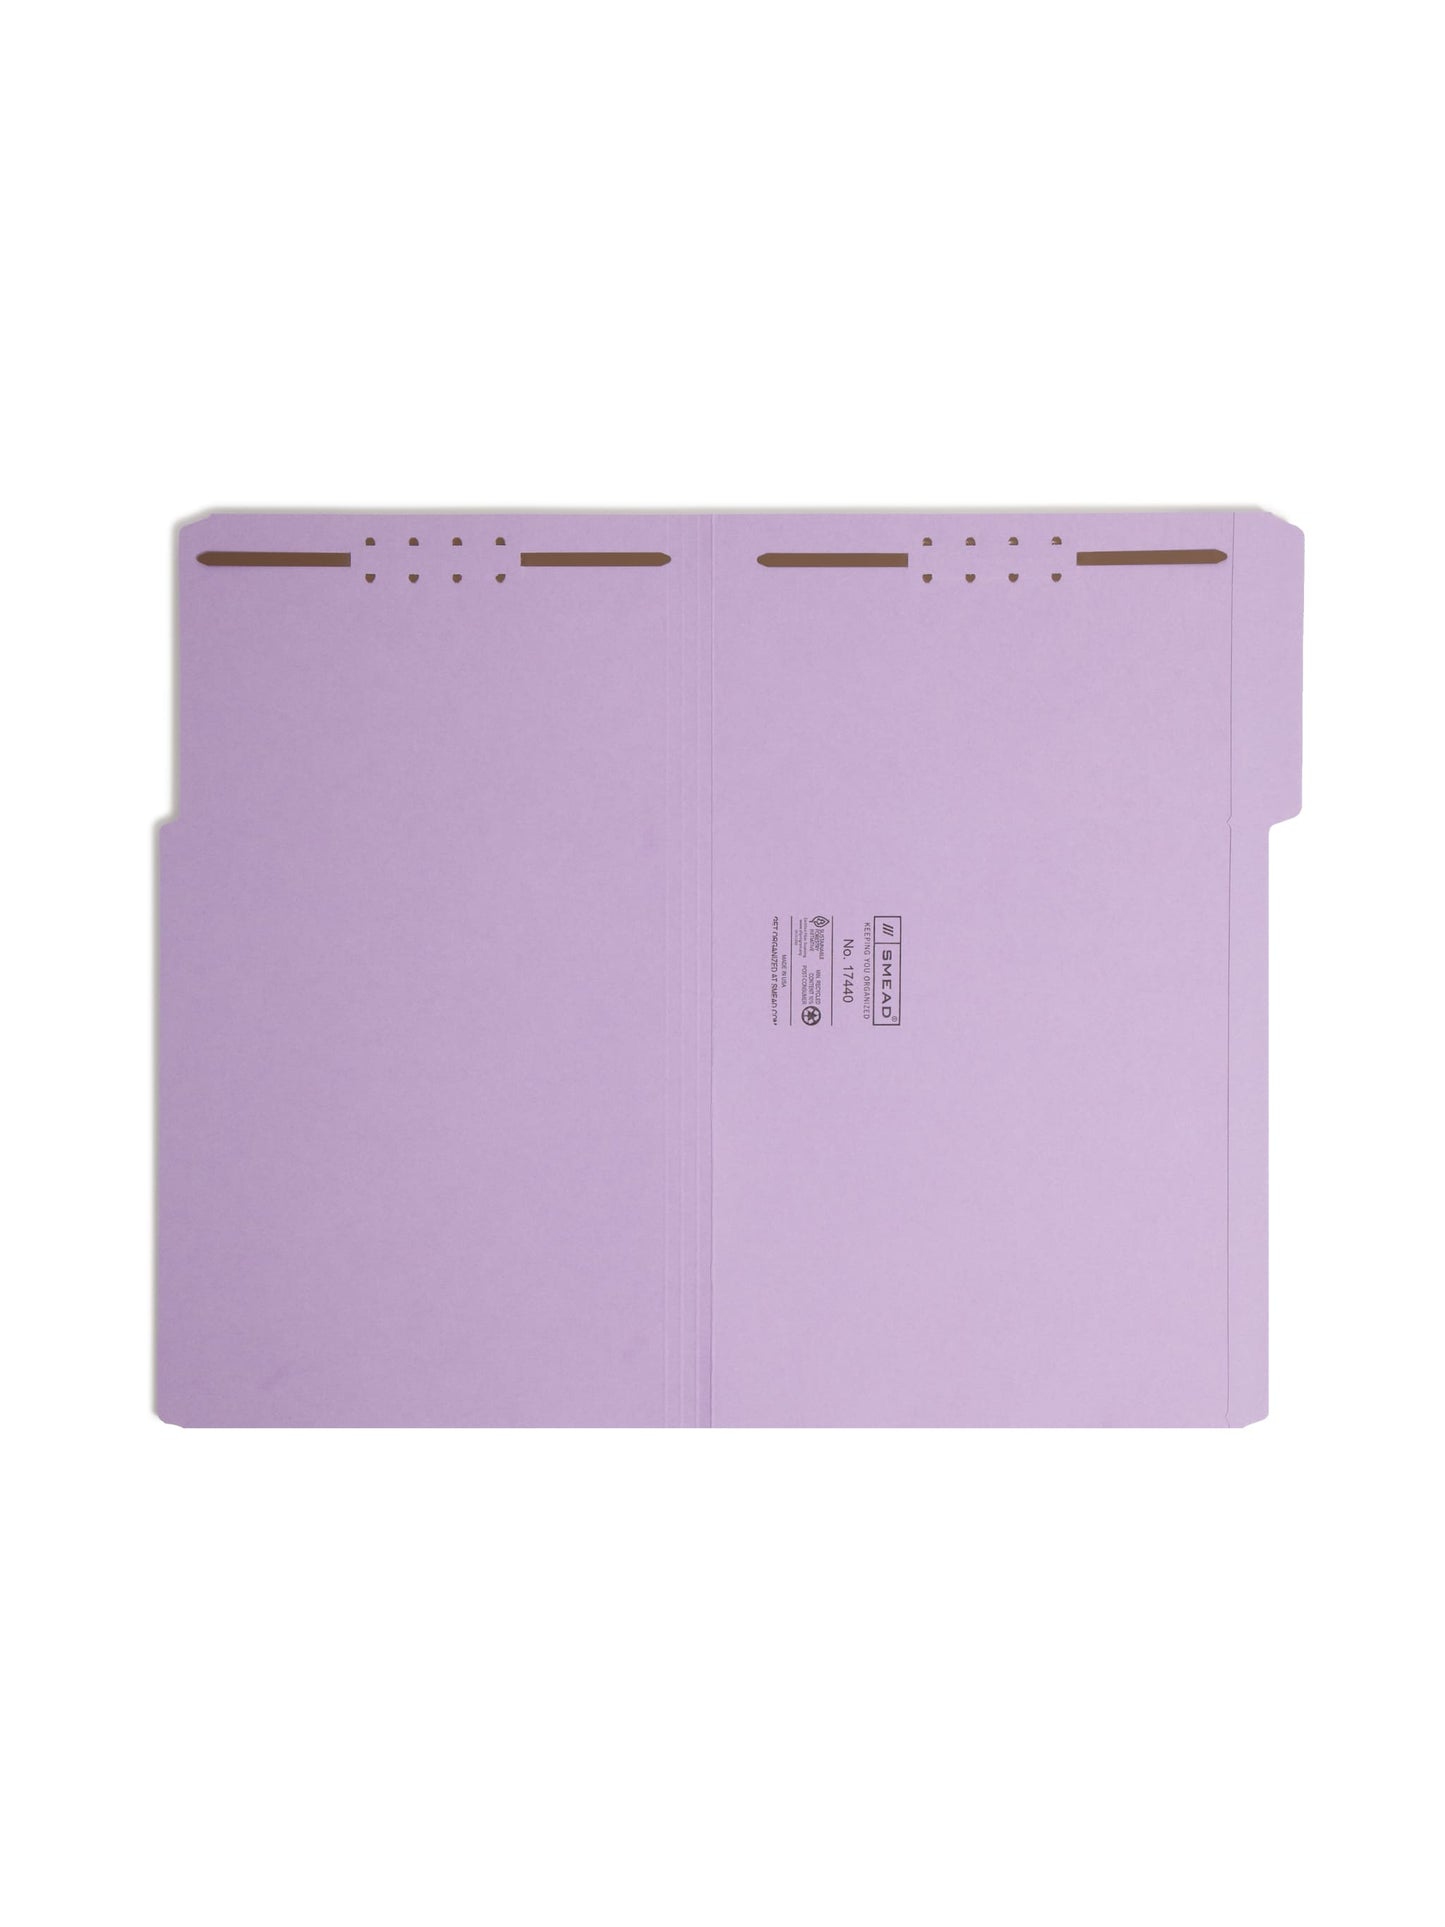 Reinforced Tab Fastener File Folders, 1/3-Cut Tab, 2 Fasteners, Lavender Color, Legal Size, Set of 50, 086486174404